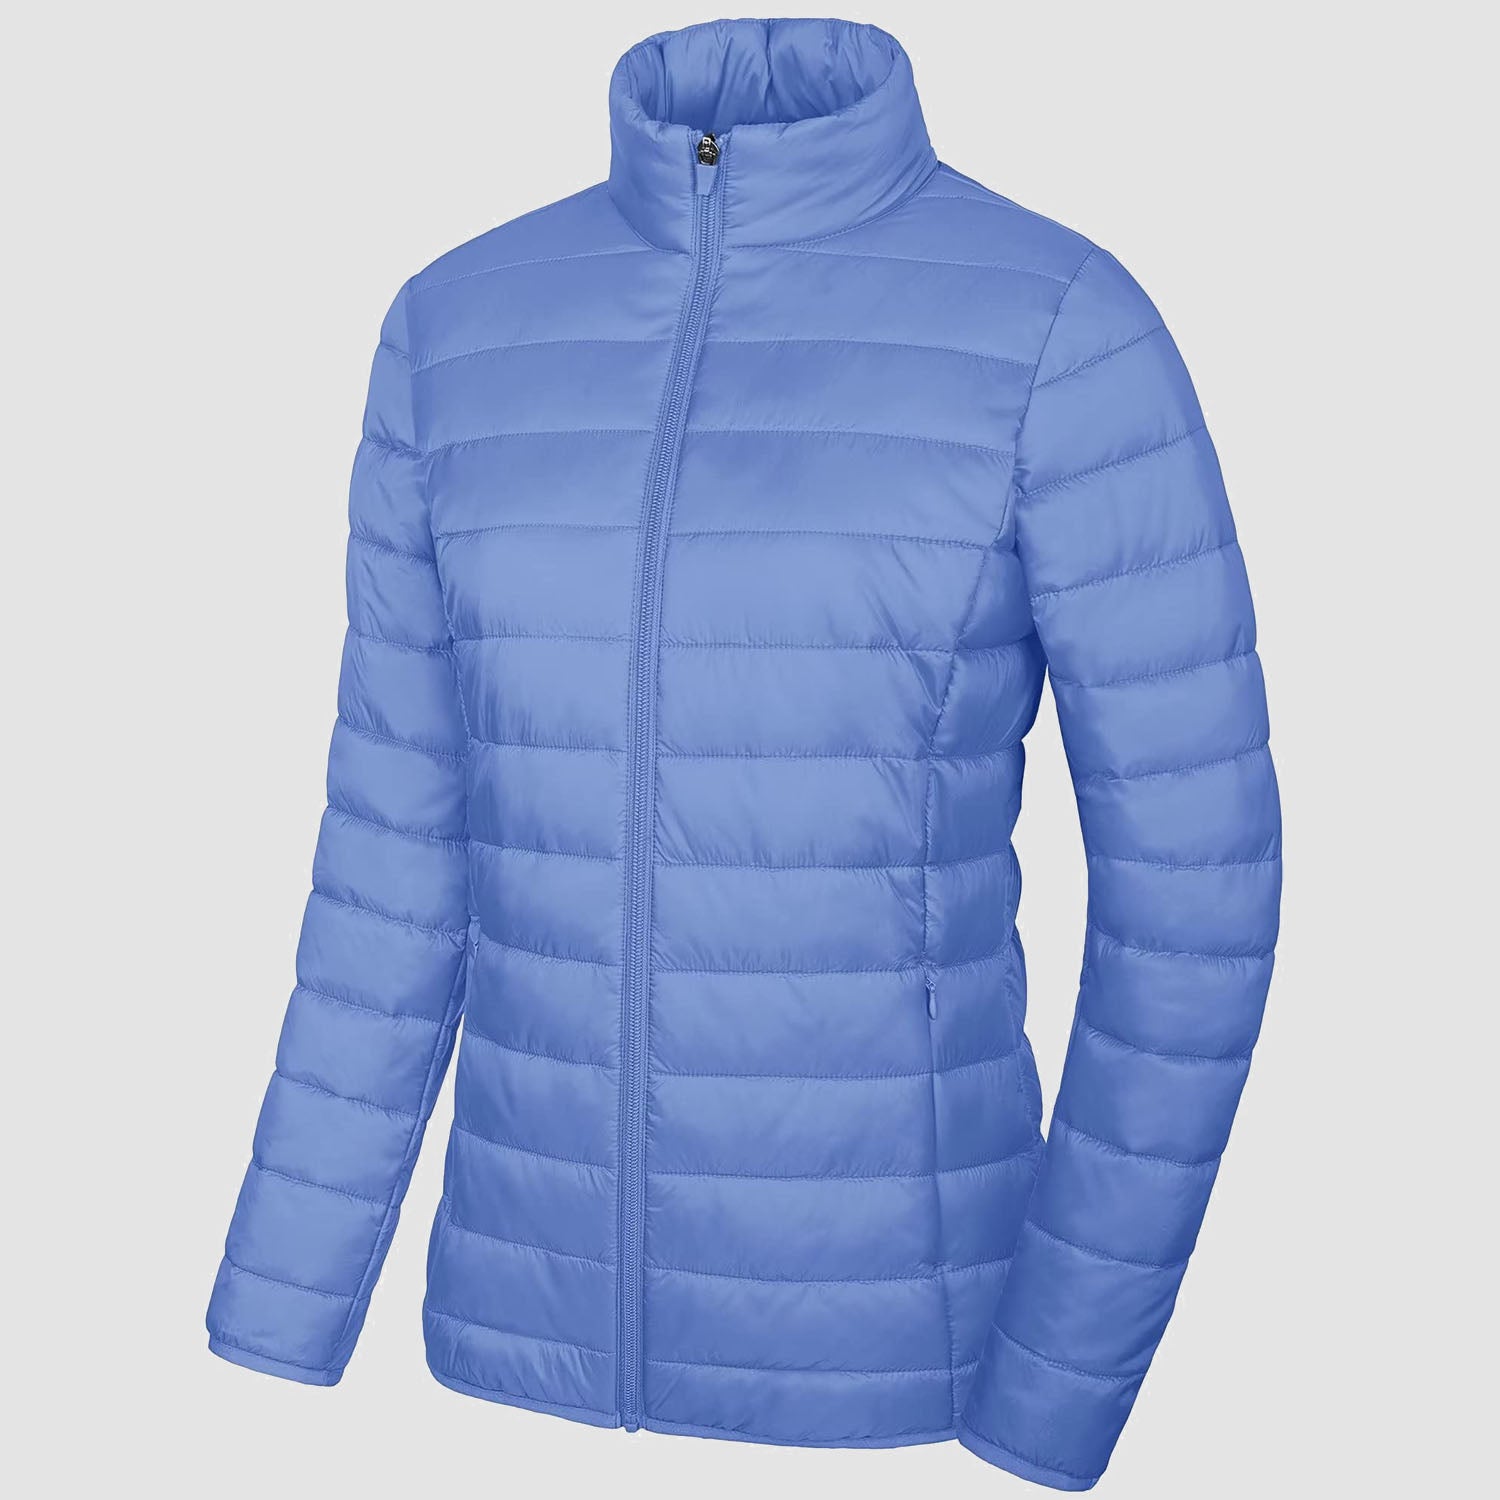 Women's  Lightweight Puffer Jacket Stand Collar Full Zip Quilted Lined Winter Coat